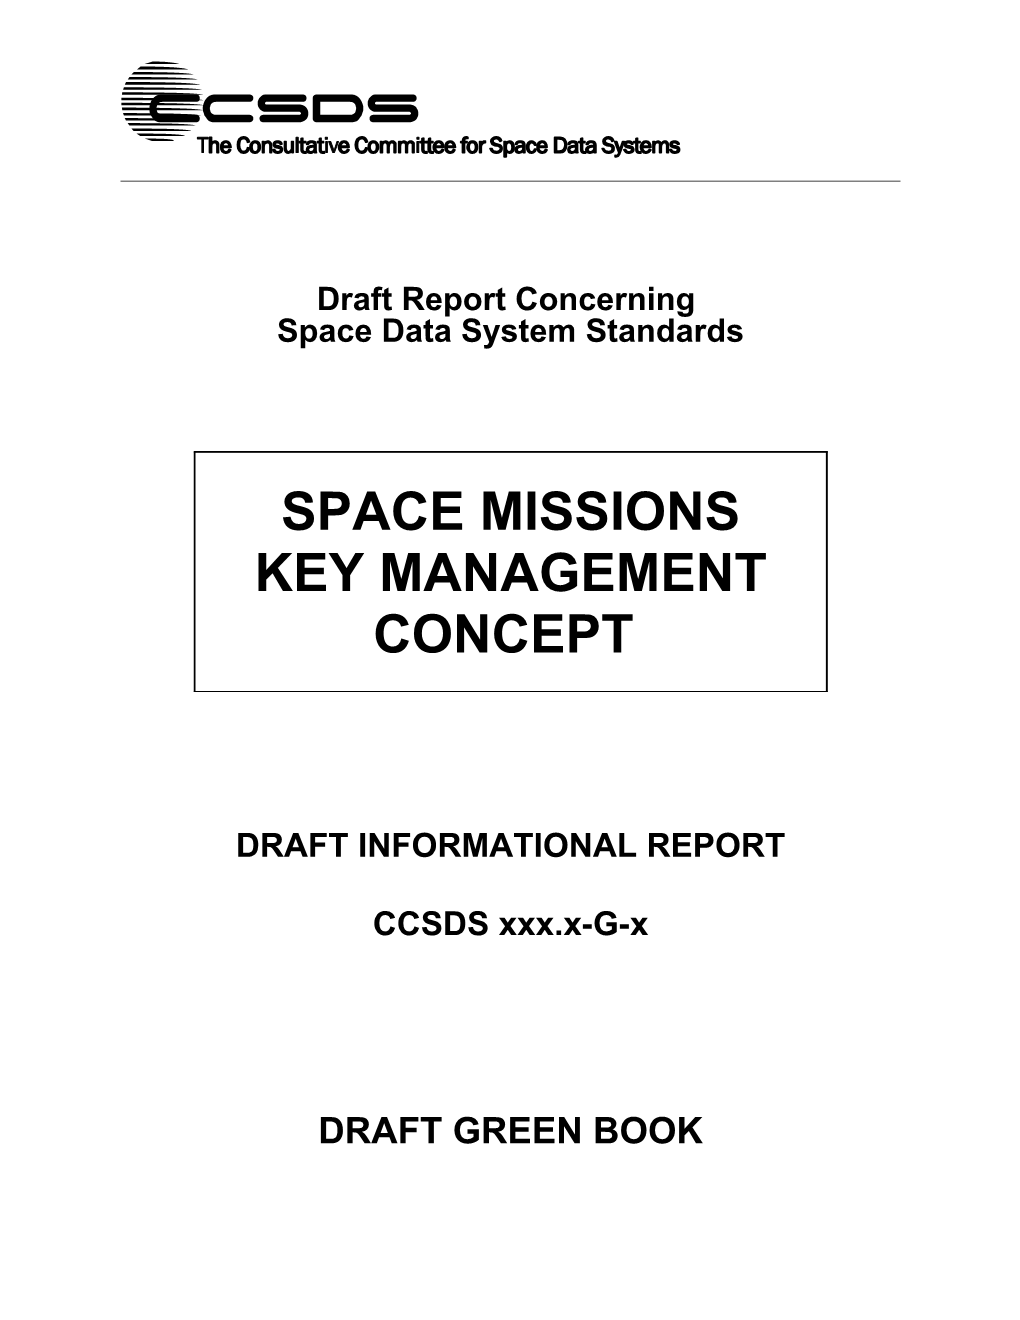 Space Missions Key Management Concept